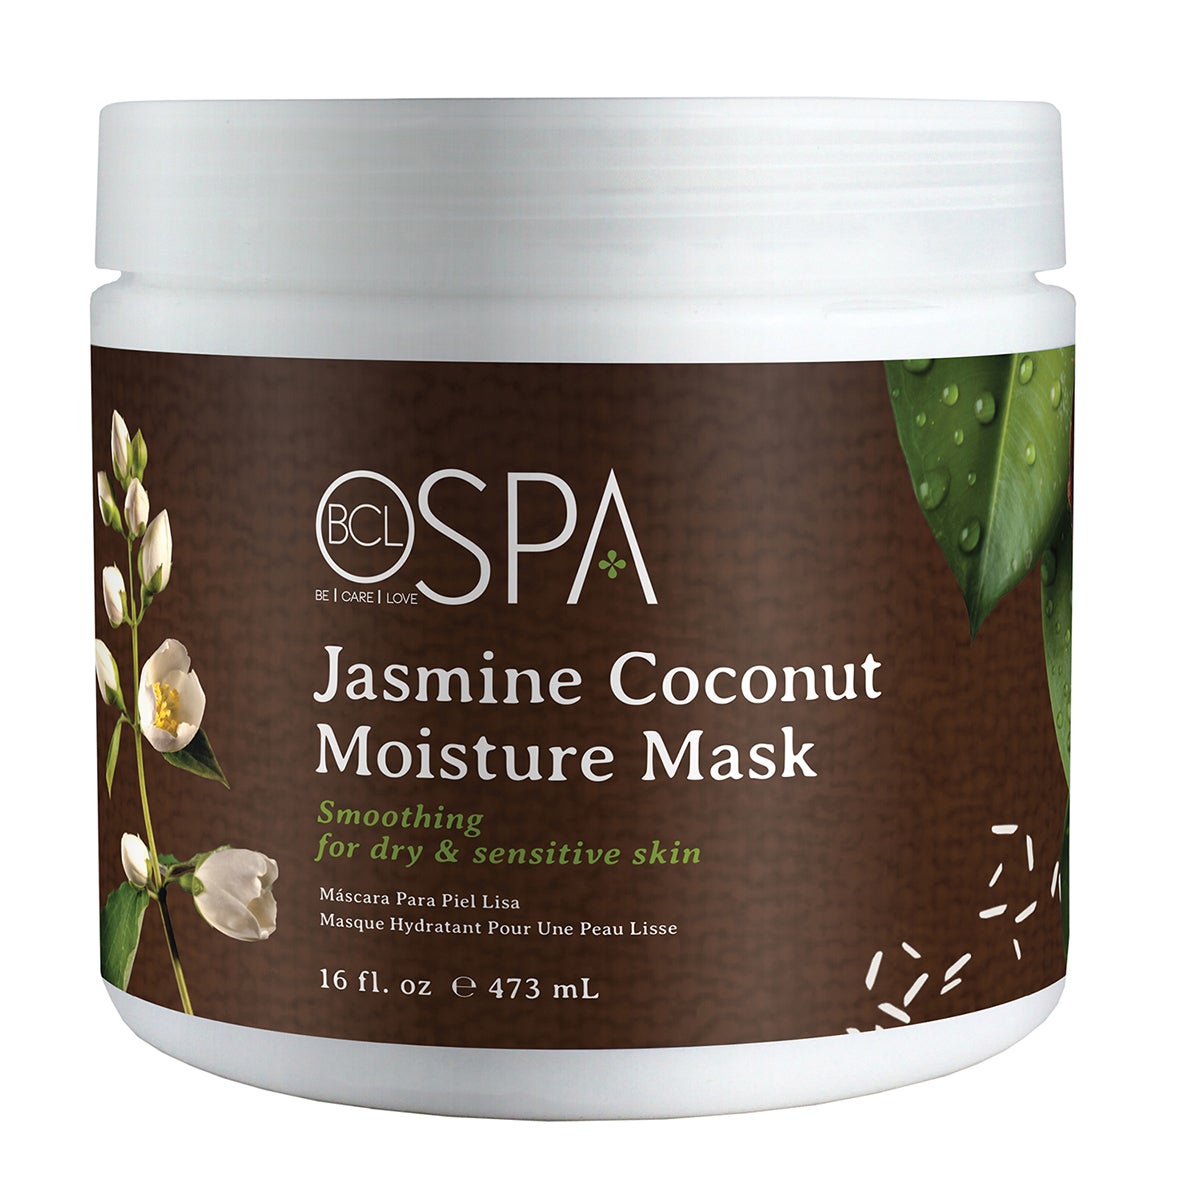 Dannyco - Spa Moisture Mask Jasmine Coconut 16oz